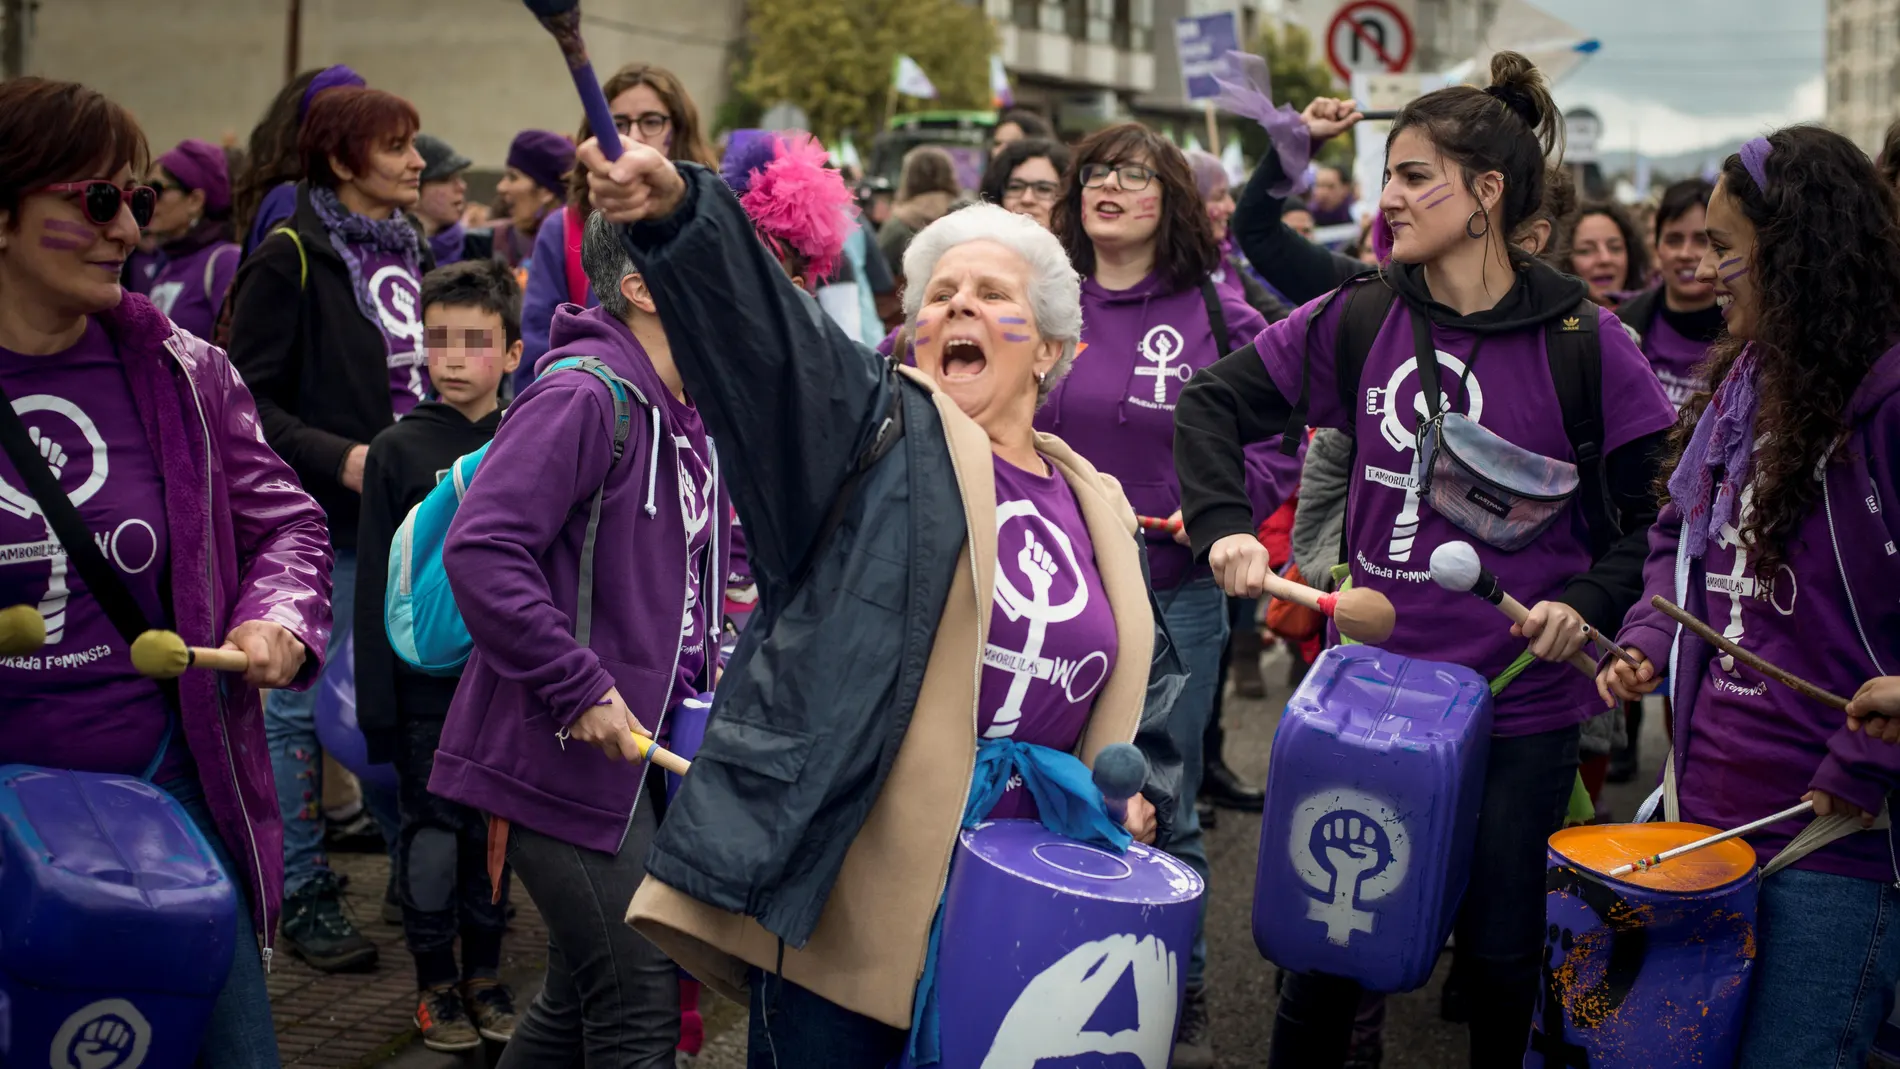 Marcha feminista tras la reapertura del paritorio de Verín